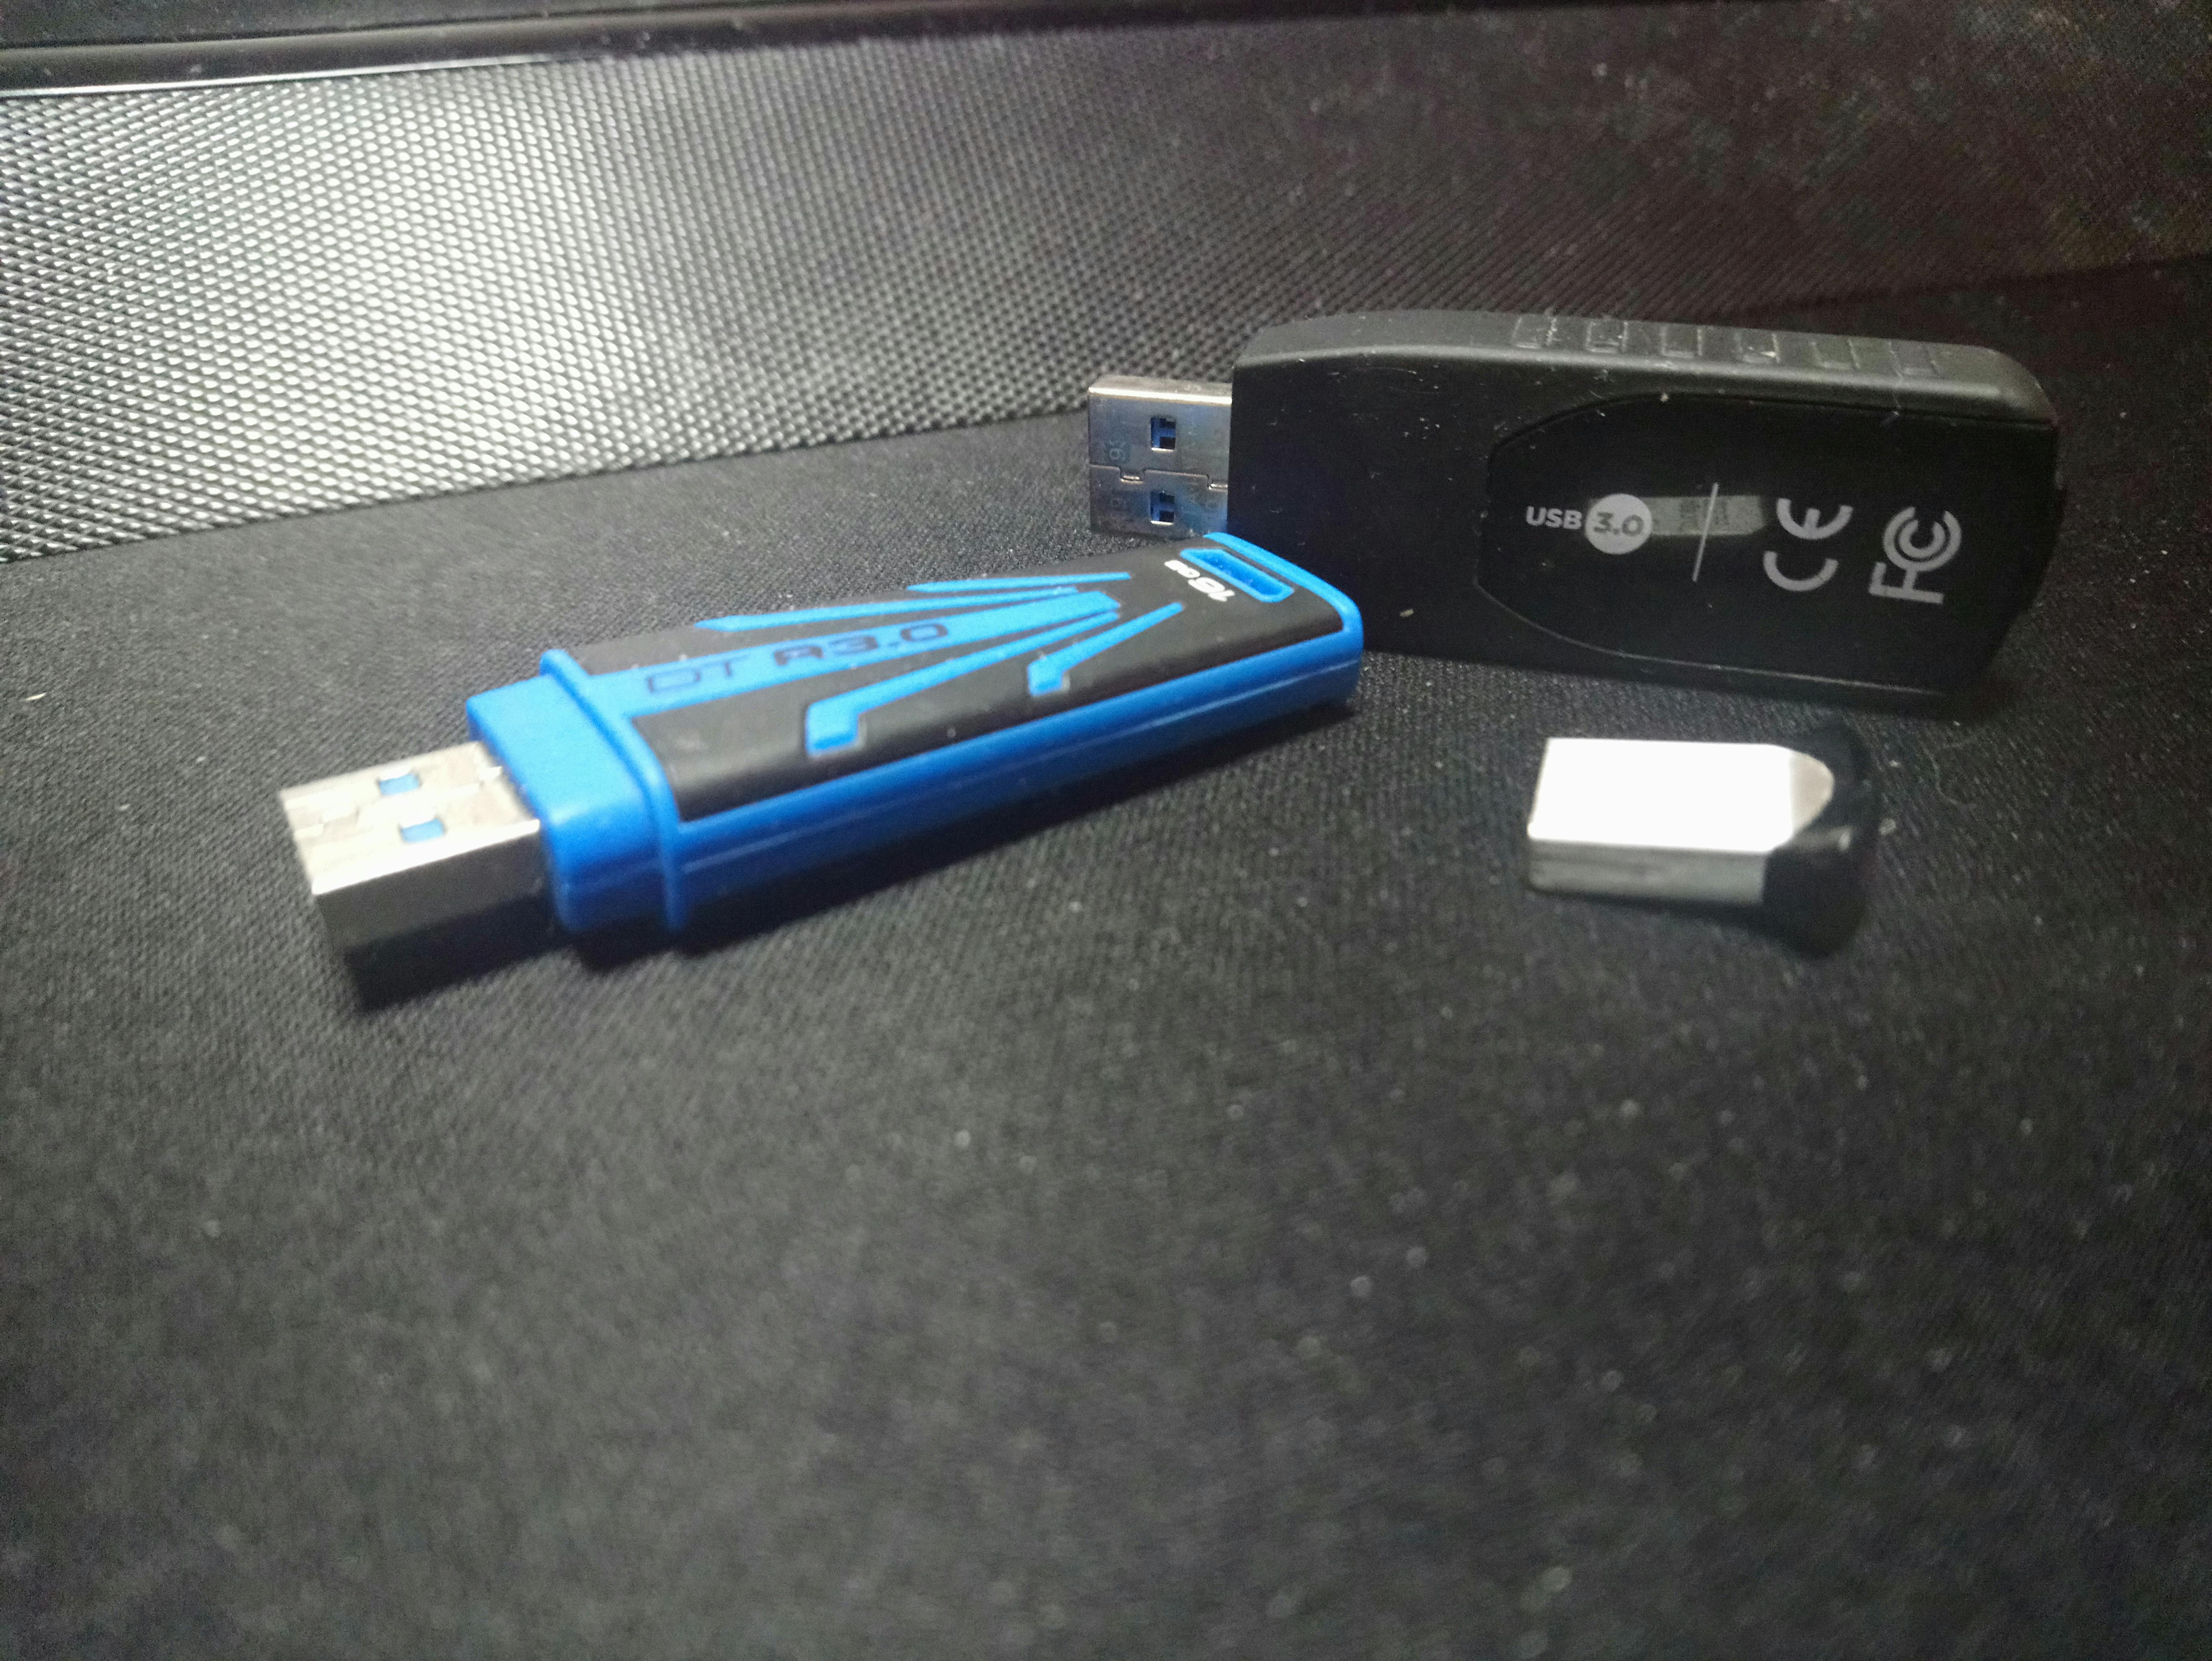 Free stock photo of usb 3.0, usb memory sticks, USB sticks